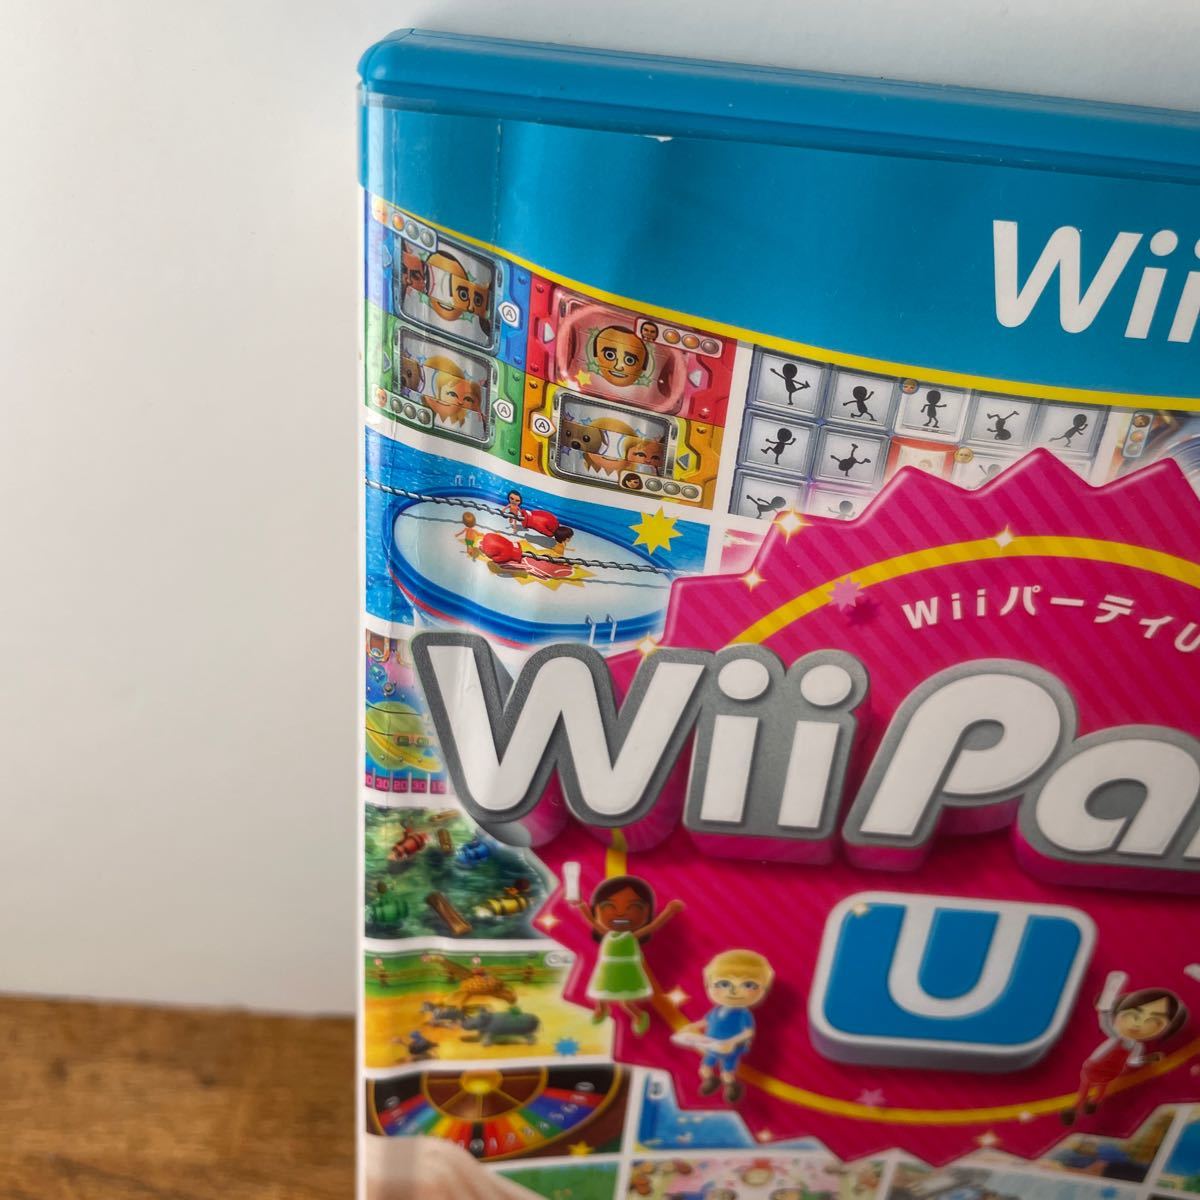 WiiパーティU Wii Party U